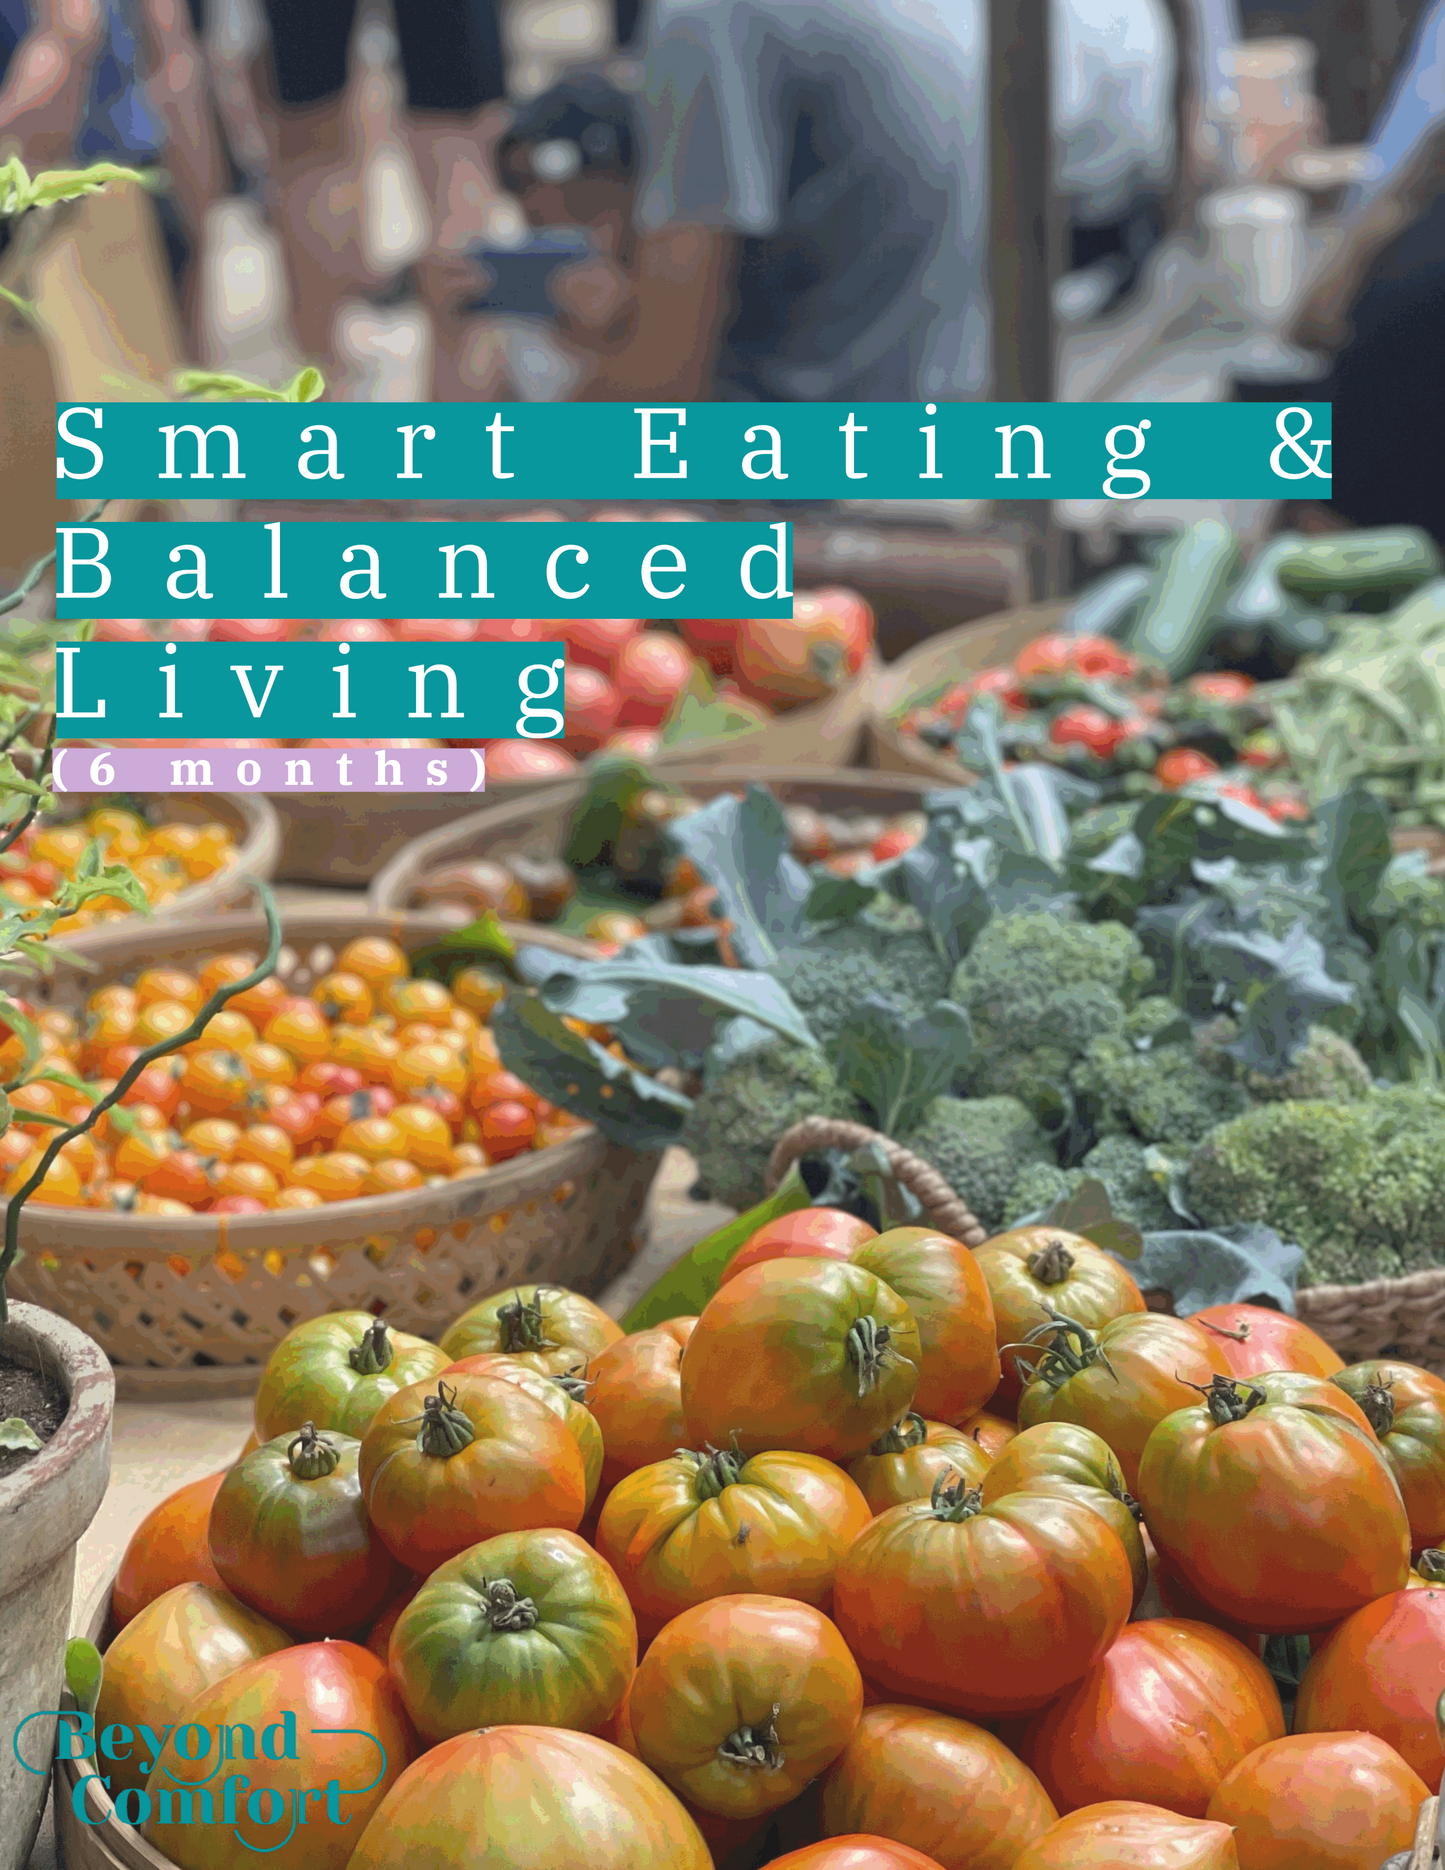 Smart Eating & Balanced Living (6 months)